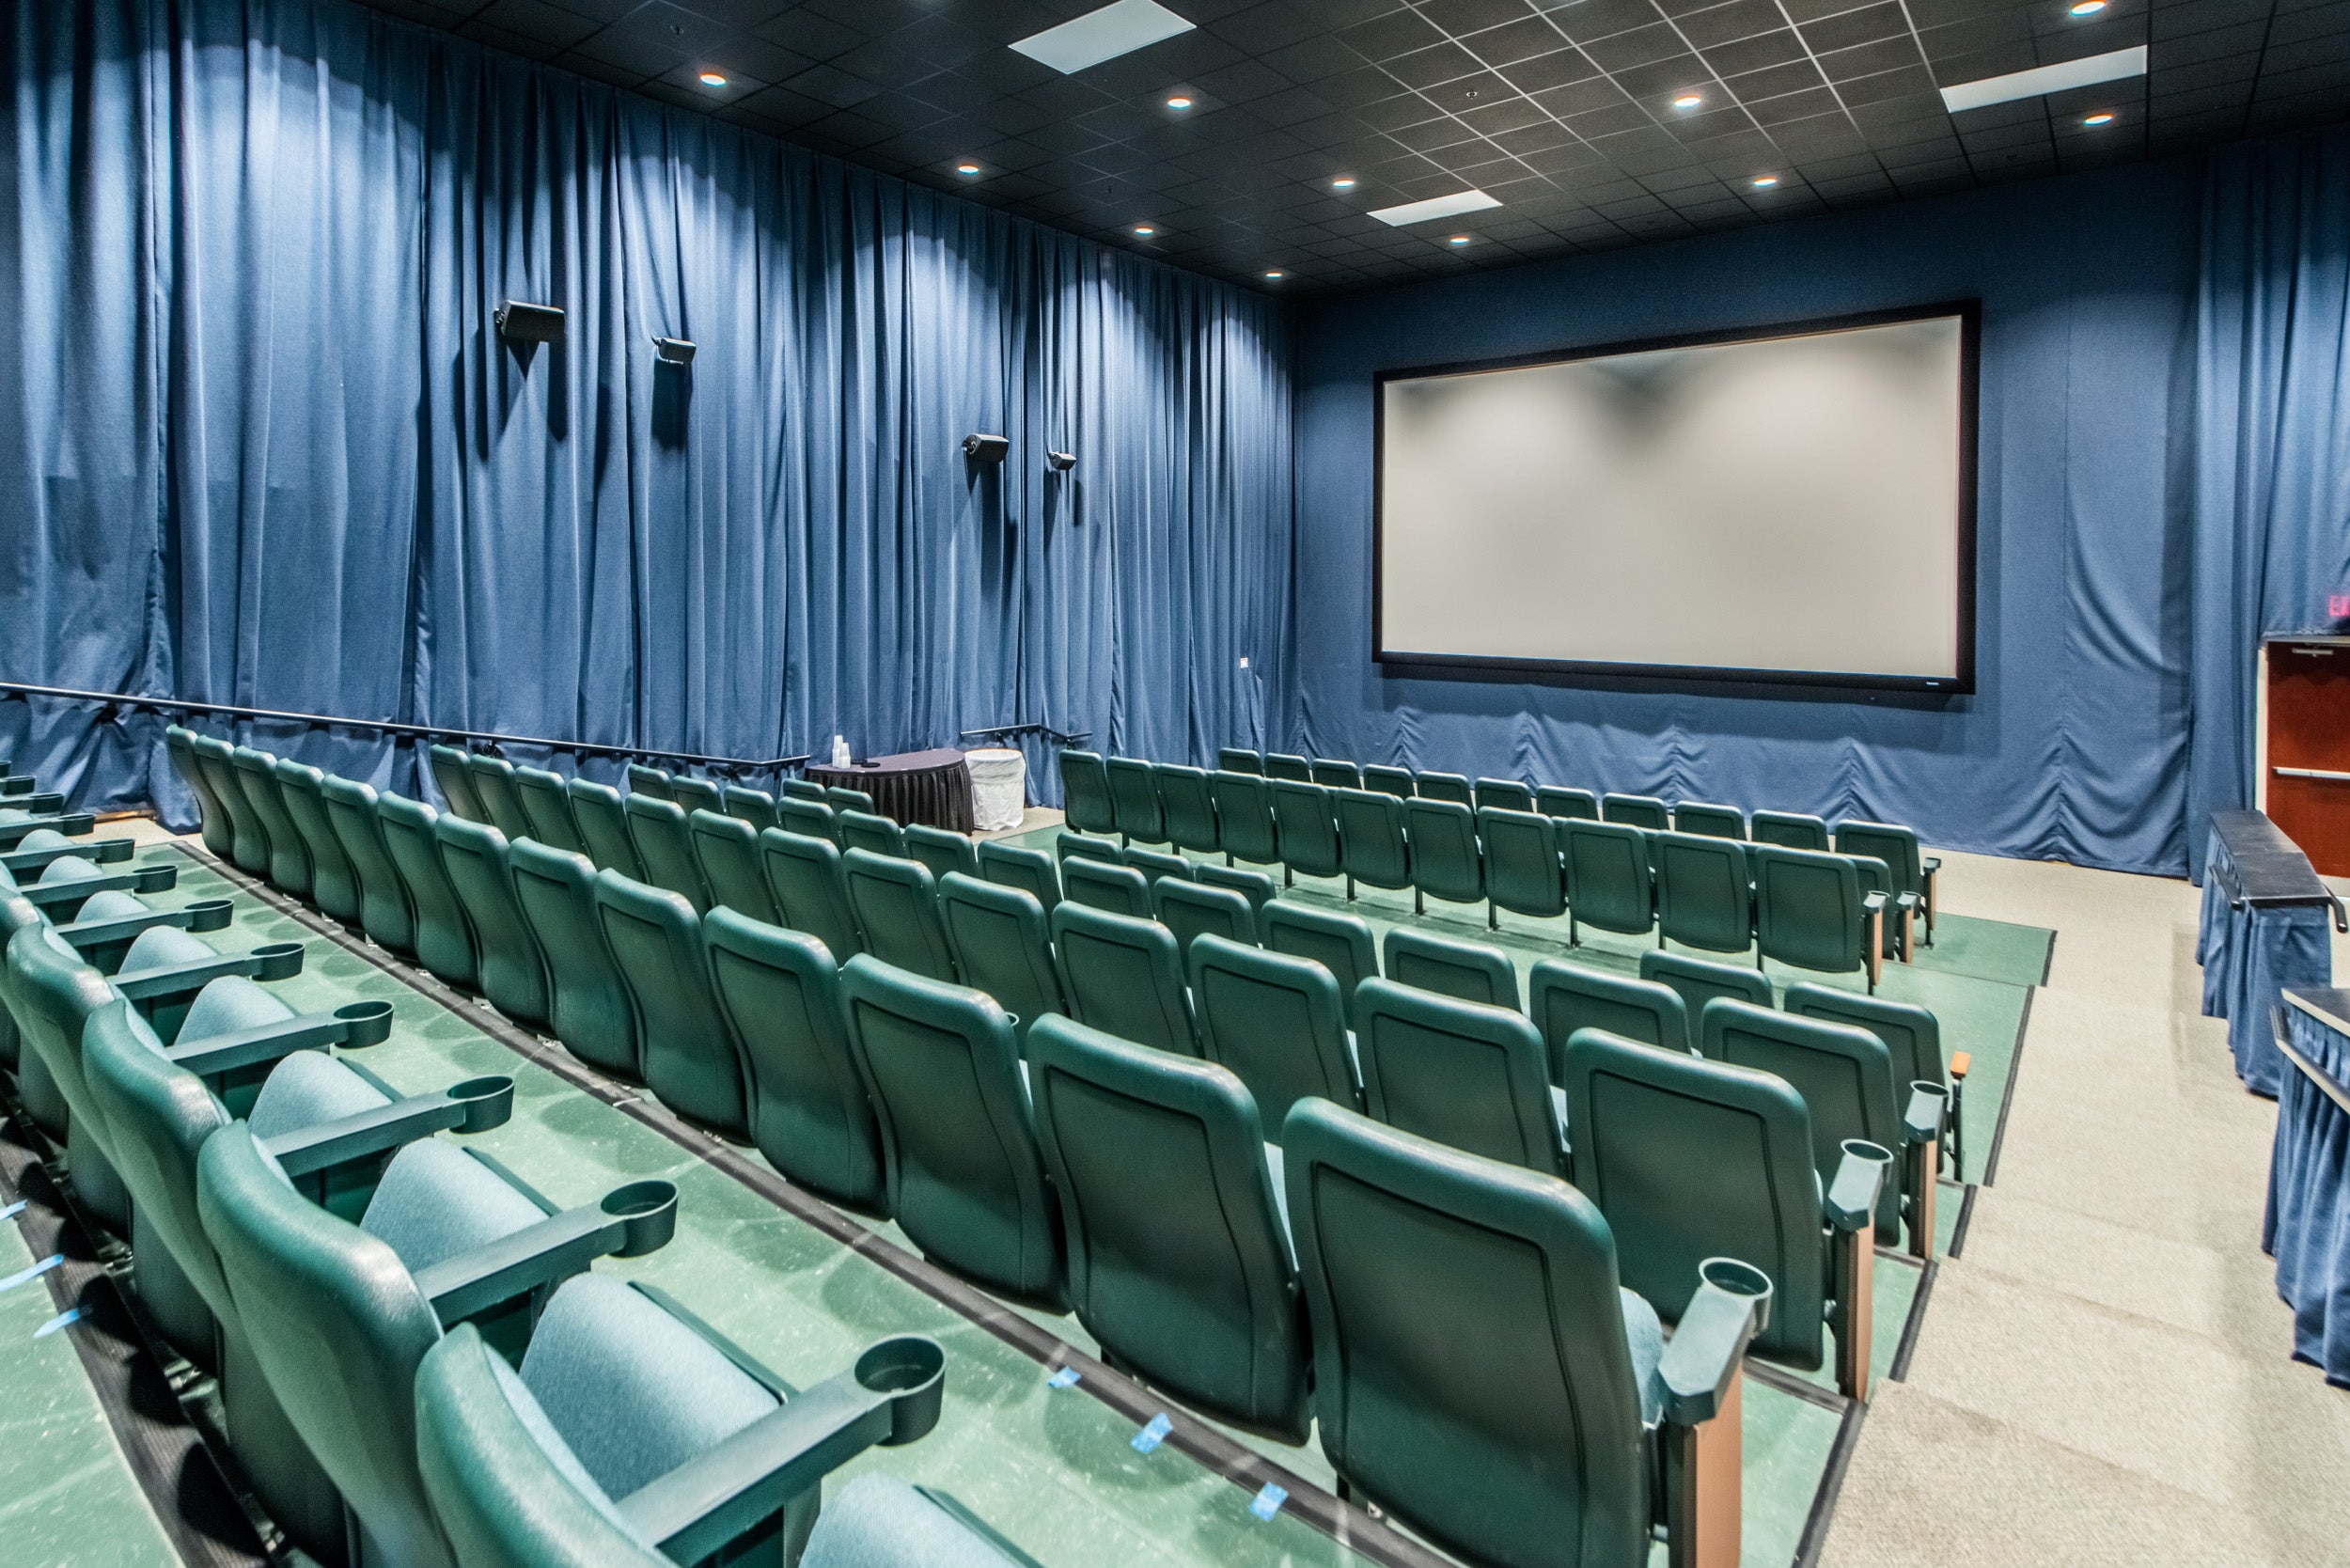 Majestic Movie Theater w/ stadium seating